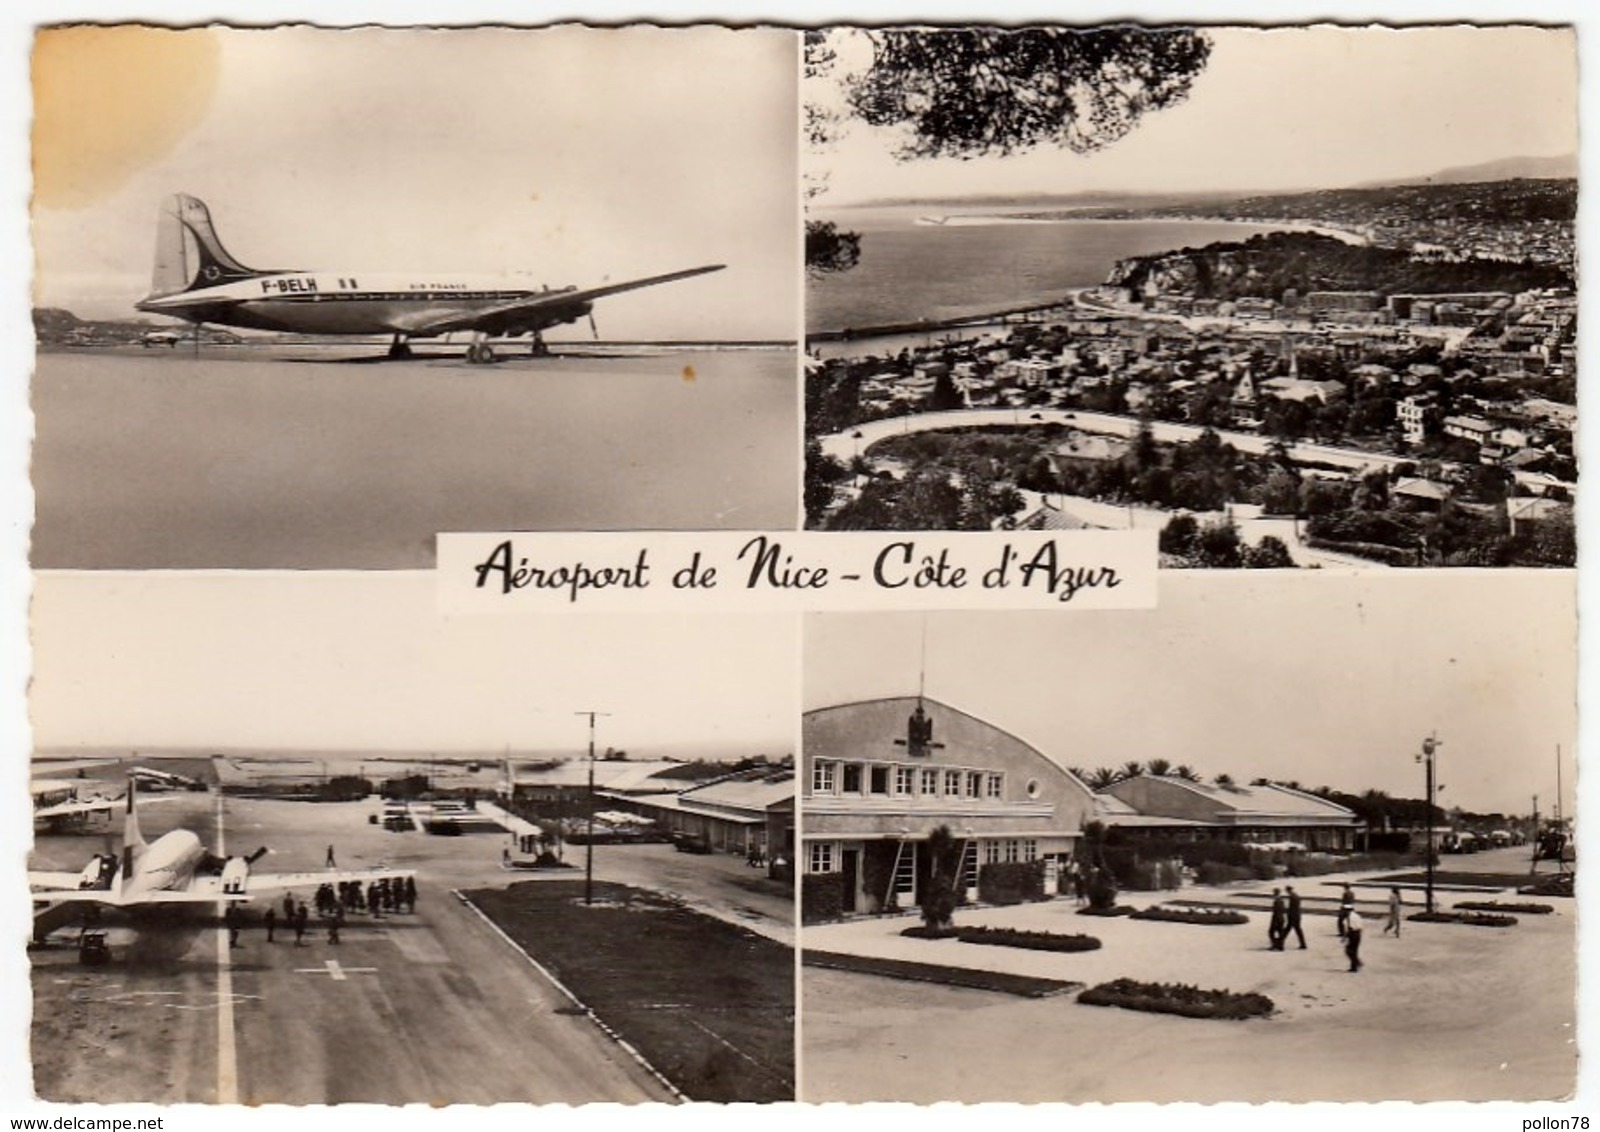 AVIAZIONE - AEREI - AEROPORTO - AEROPORT DE NICE - COTE D'AZUR - 1956Vedi Retro - Aerodromi